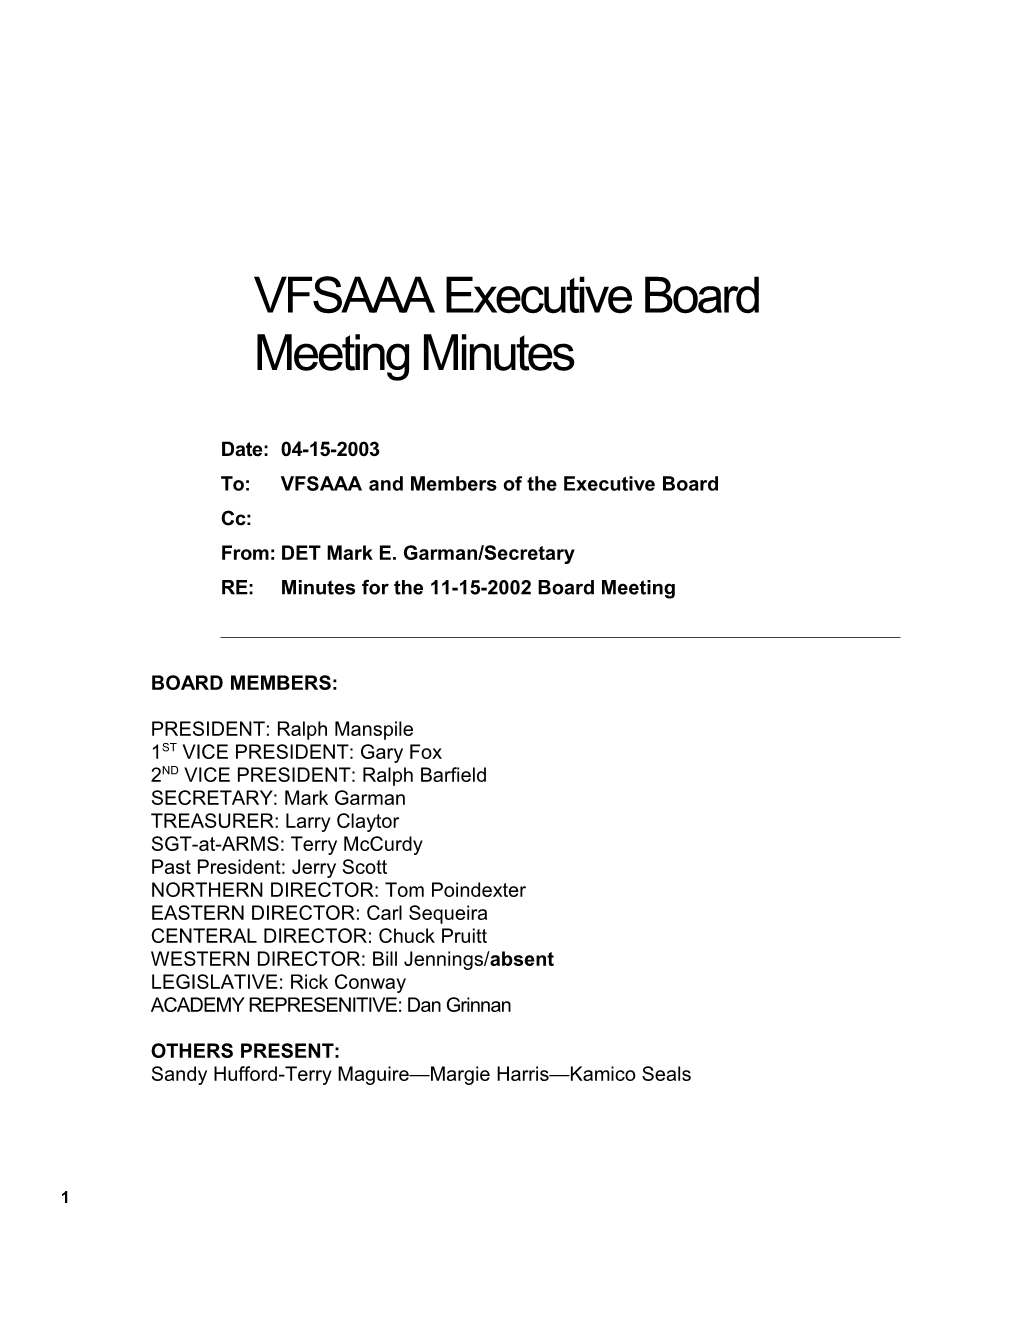 VFSAAA General Membership Meeting Minutes